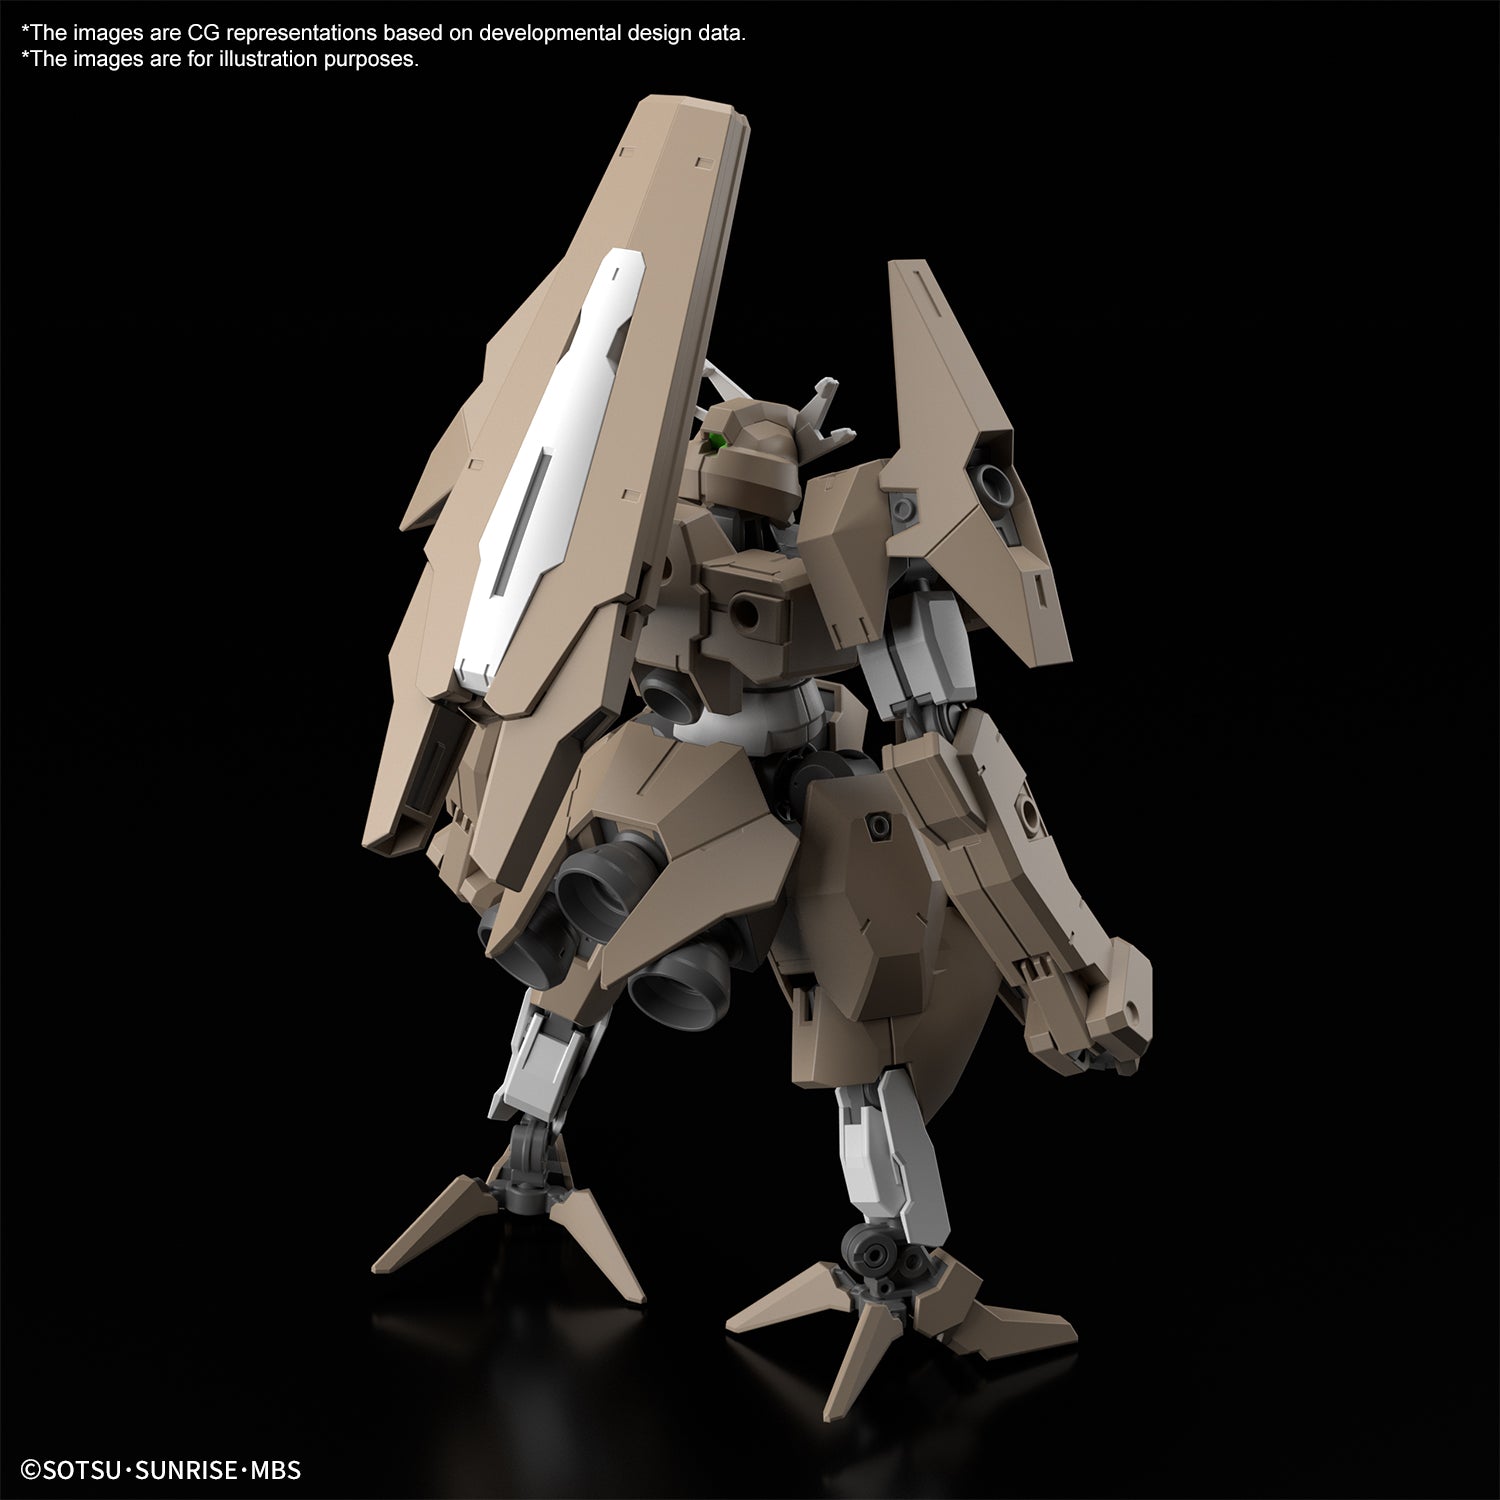 GUNDAM - HG 1/144 - Gundam LFRITH Thorn